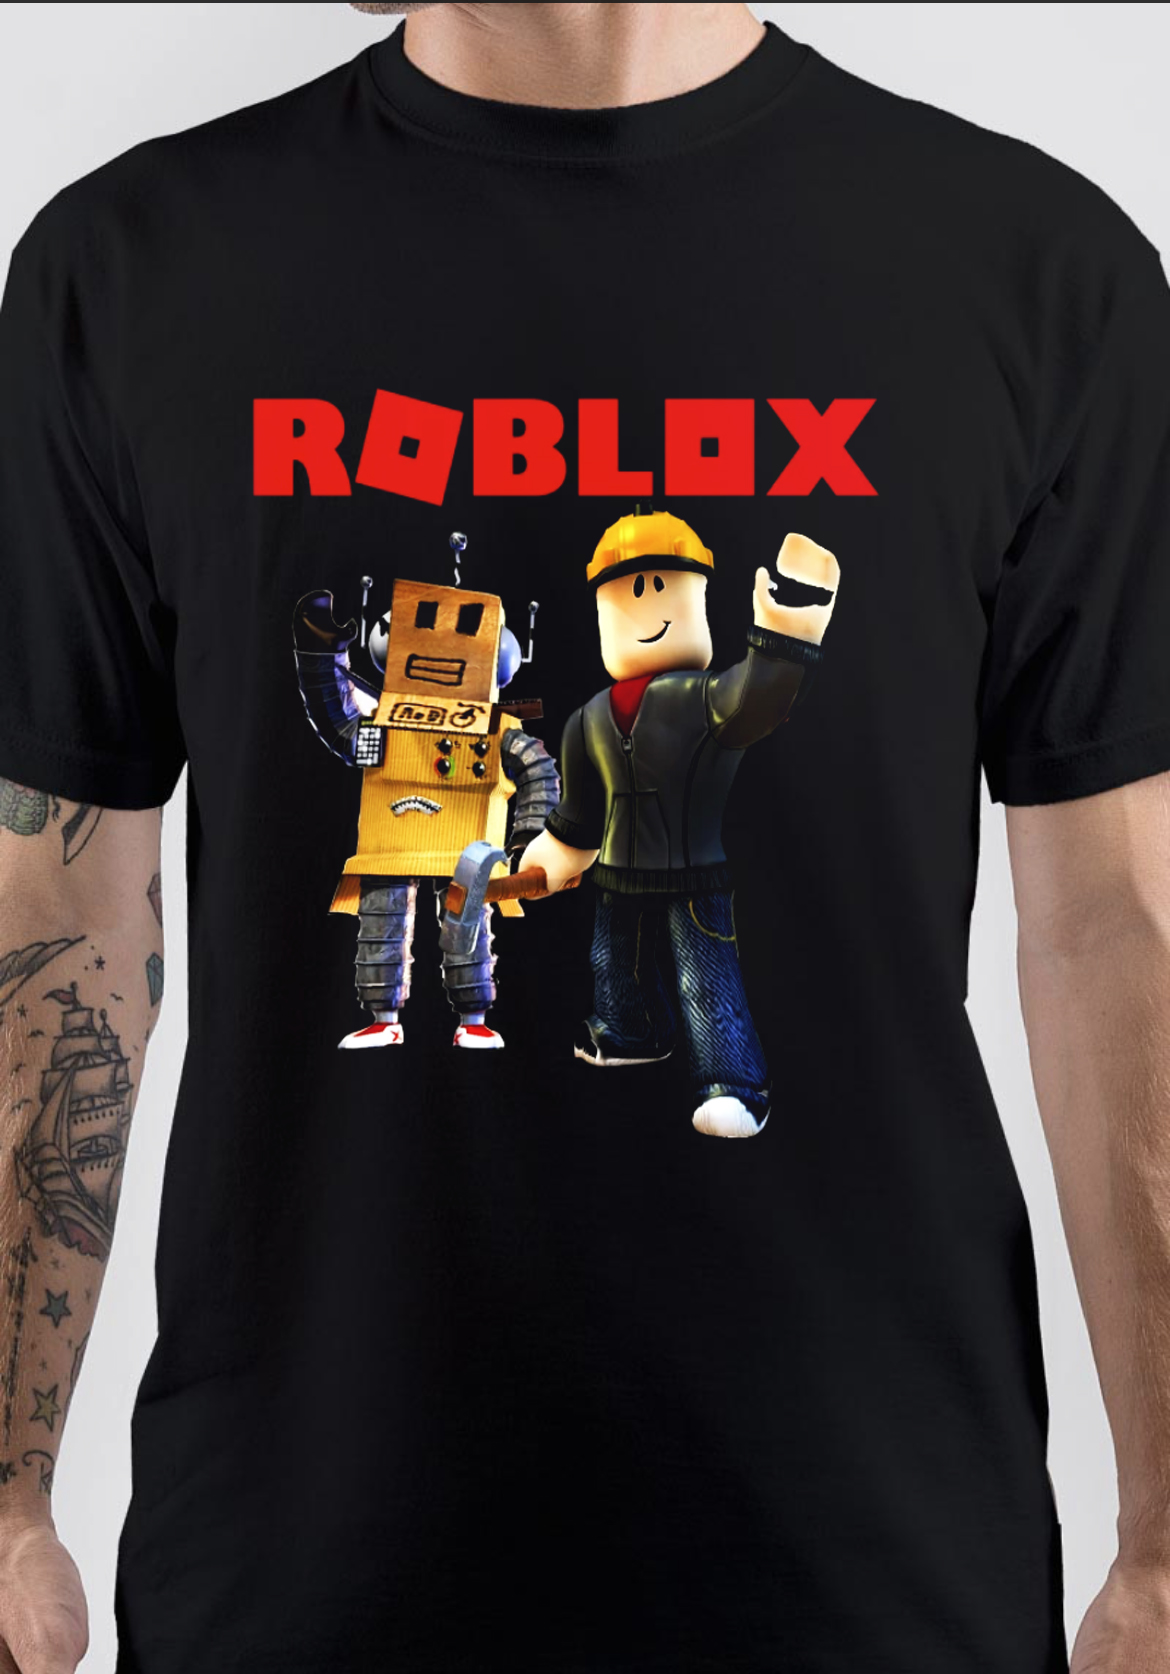 https://www.swagshirts99.com/wp-content/uploads/2022/08/Roblox-T-Shirt4.jpg